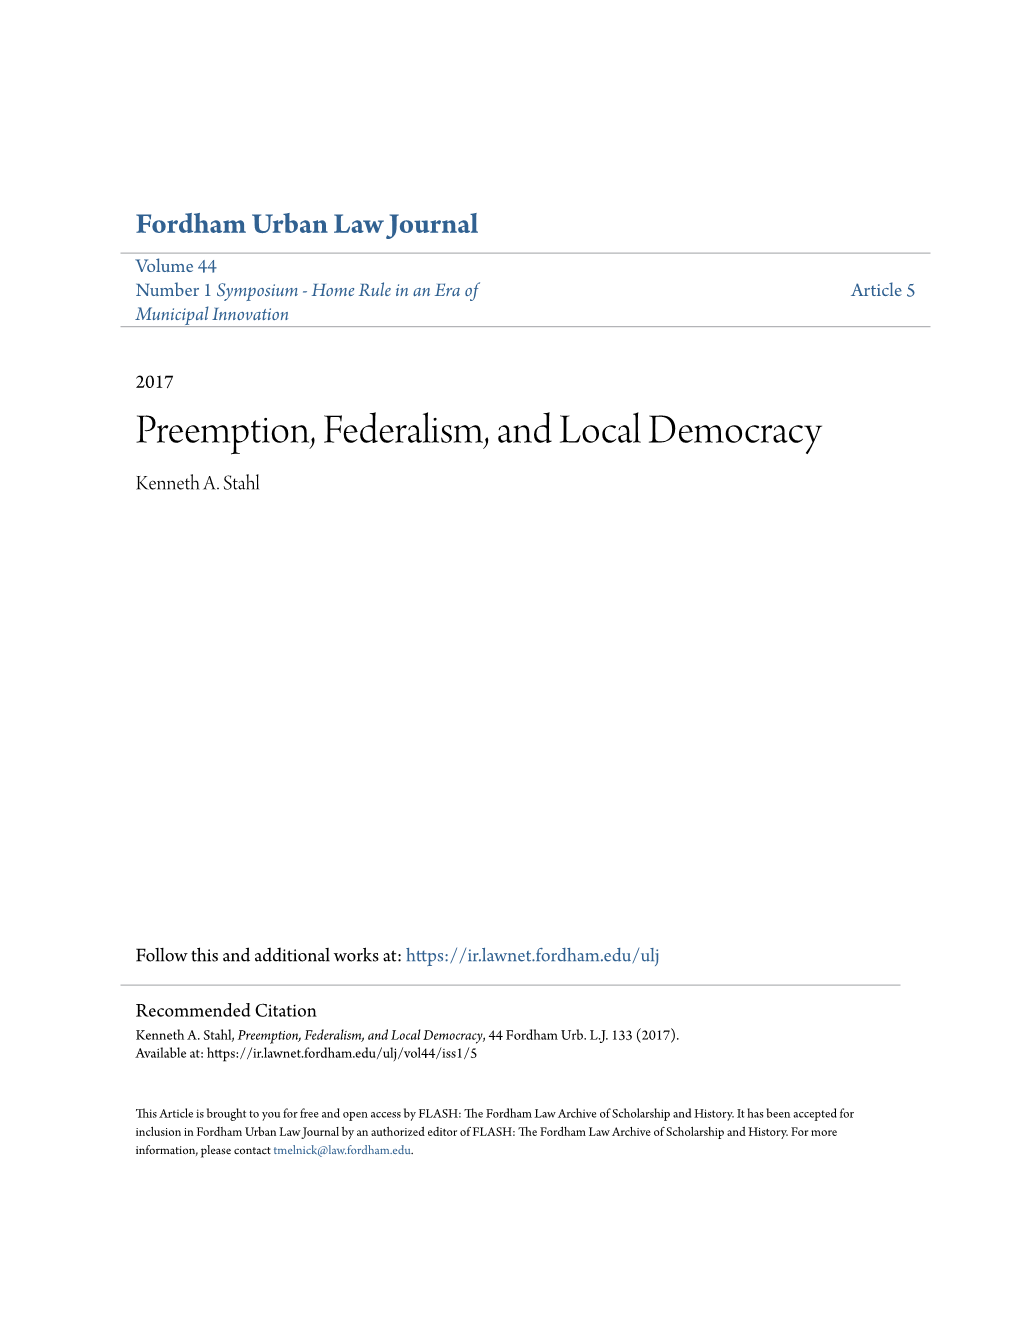 Preemption, Federalism, and Local Democracy Kenneth A